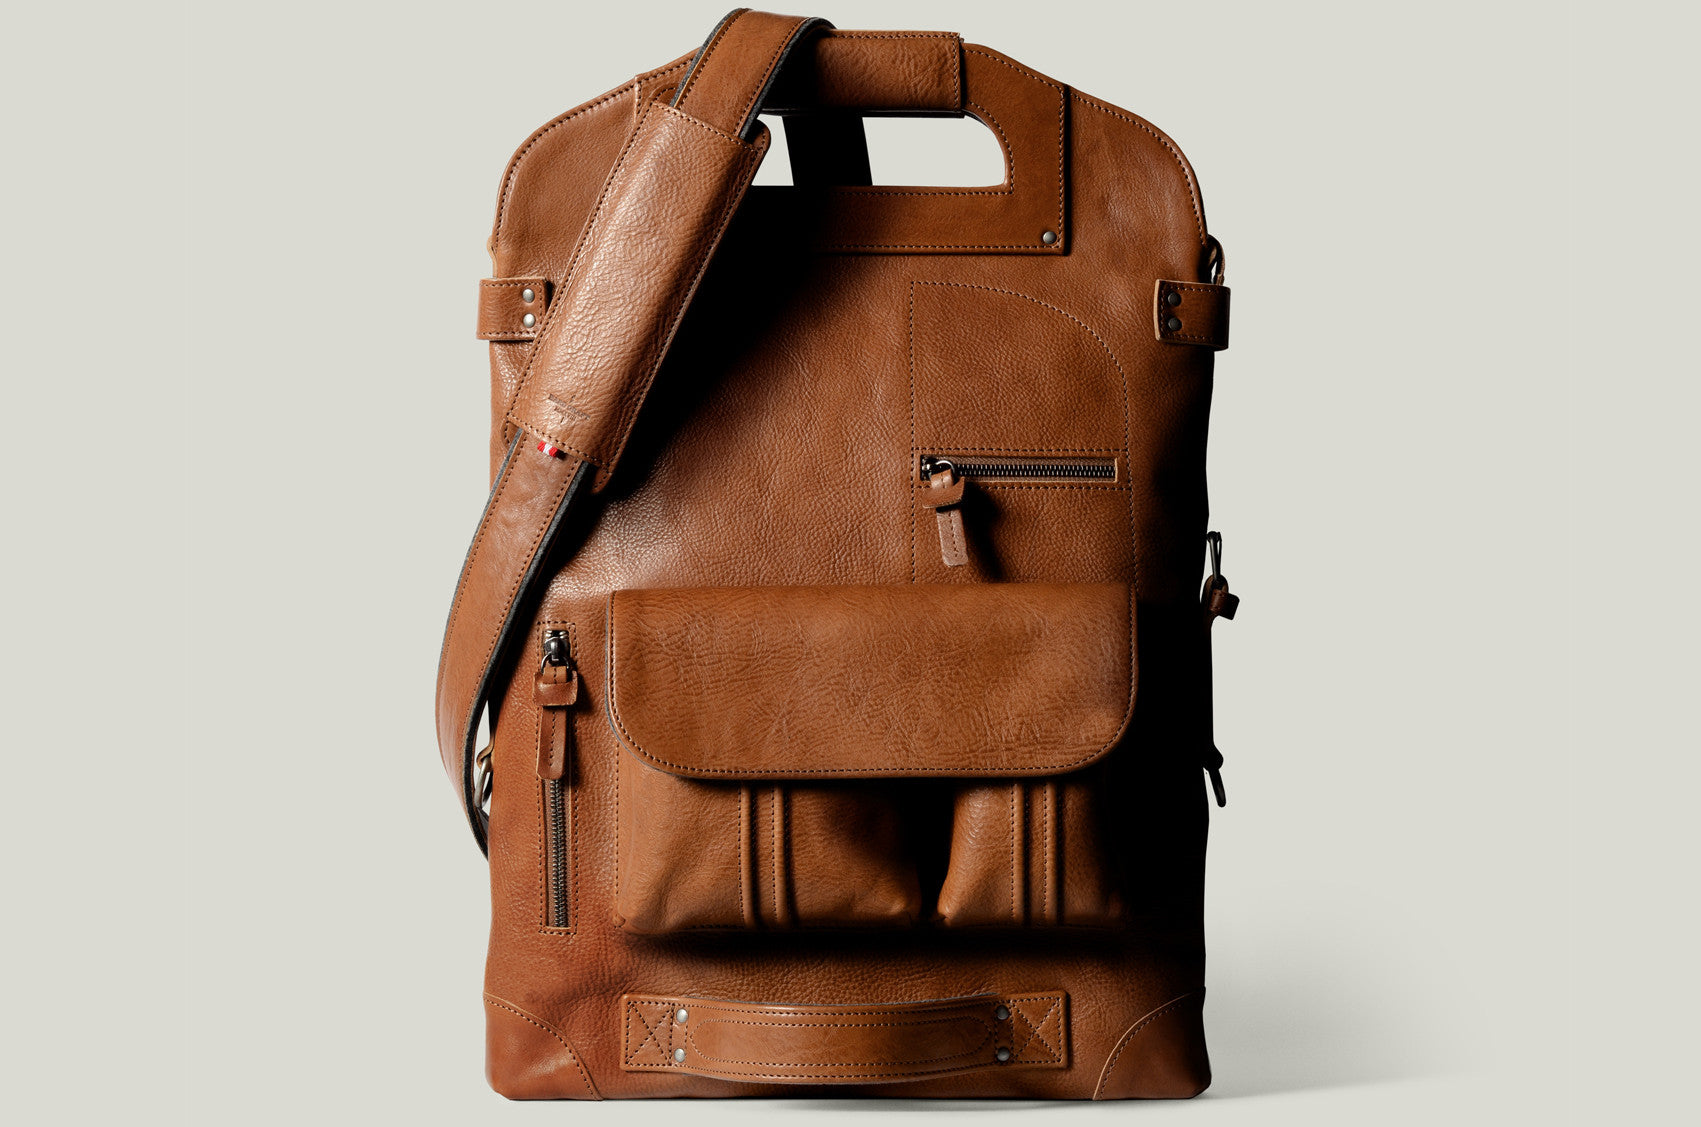 WILDFORD Oxford Bag, Office/Laptop, Brown Leatherite Flap Bag, Adjustable  Shoulder Strap, Laptop/Tablet Compartment Inside (upto 17inch). Water